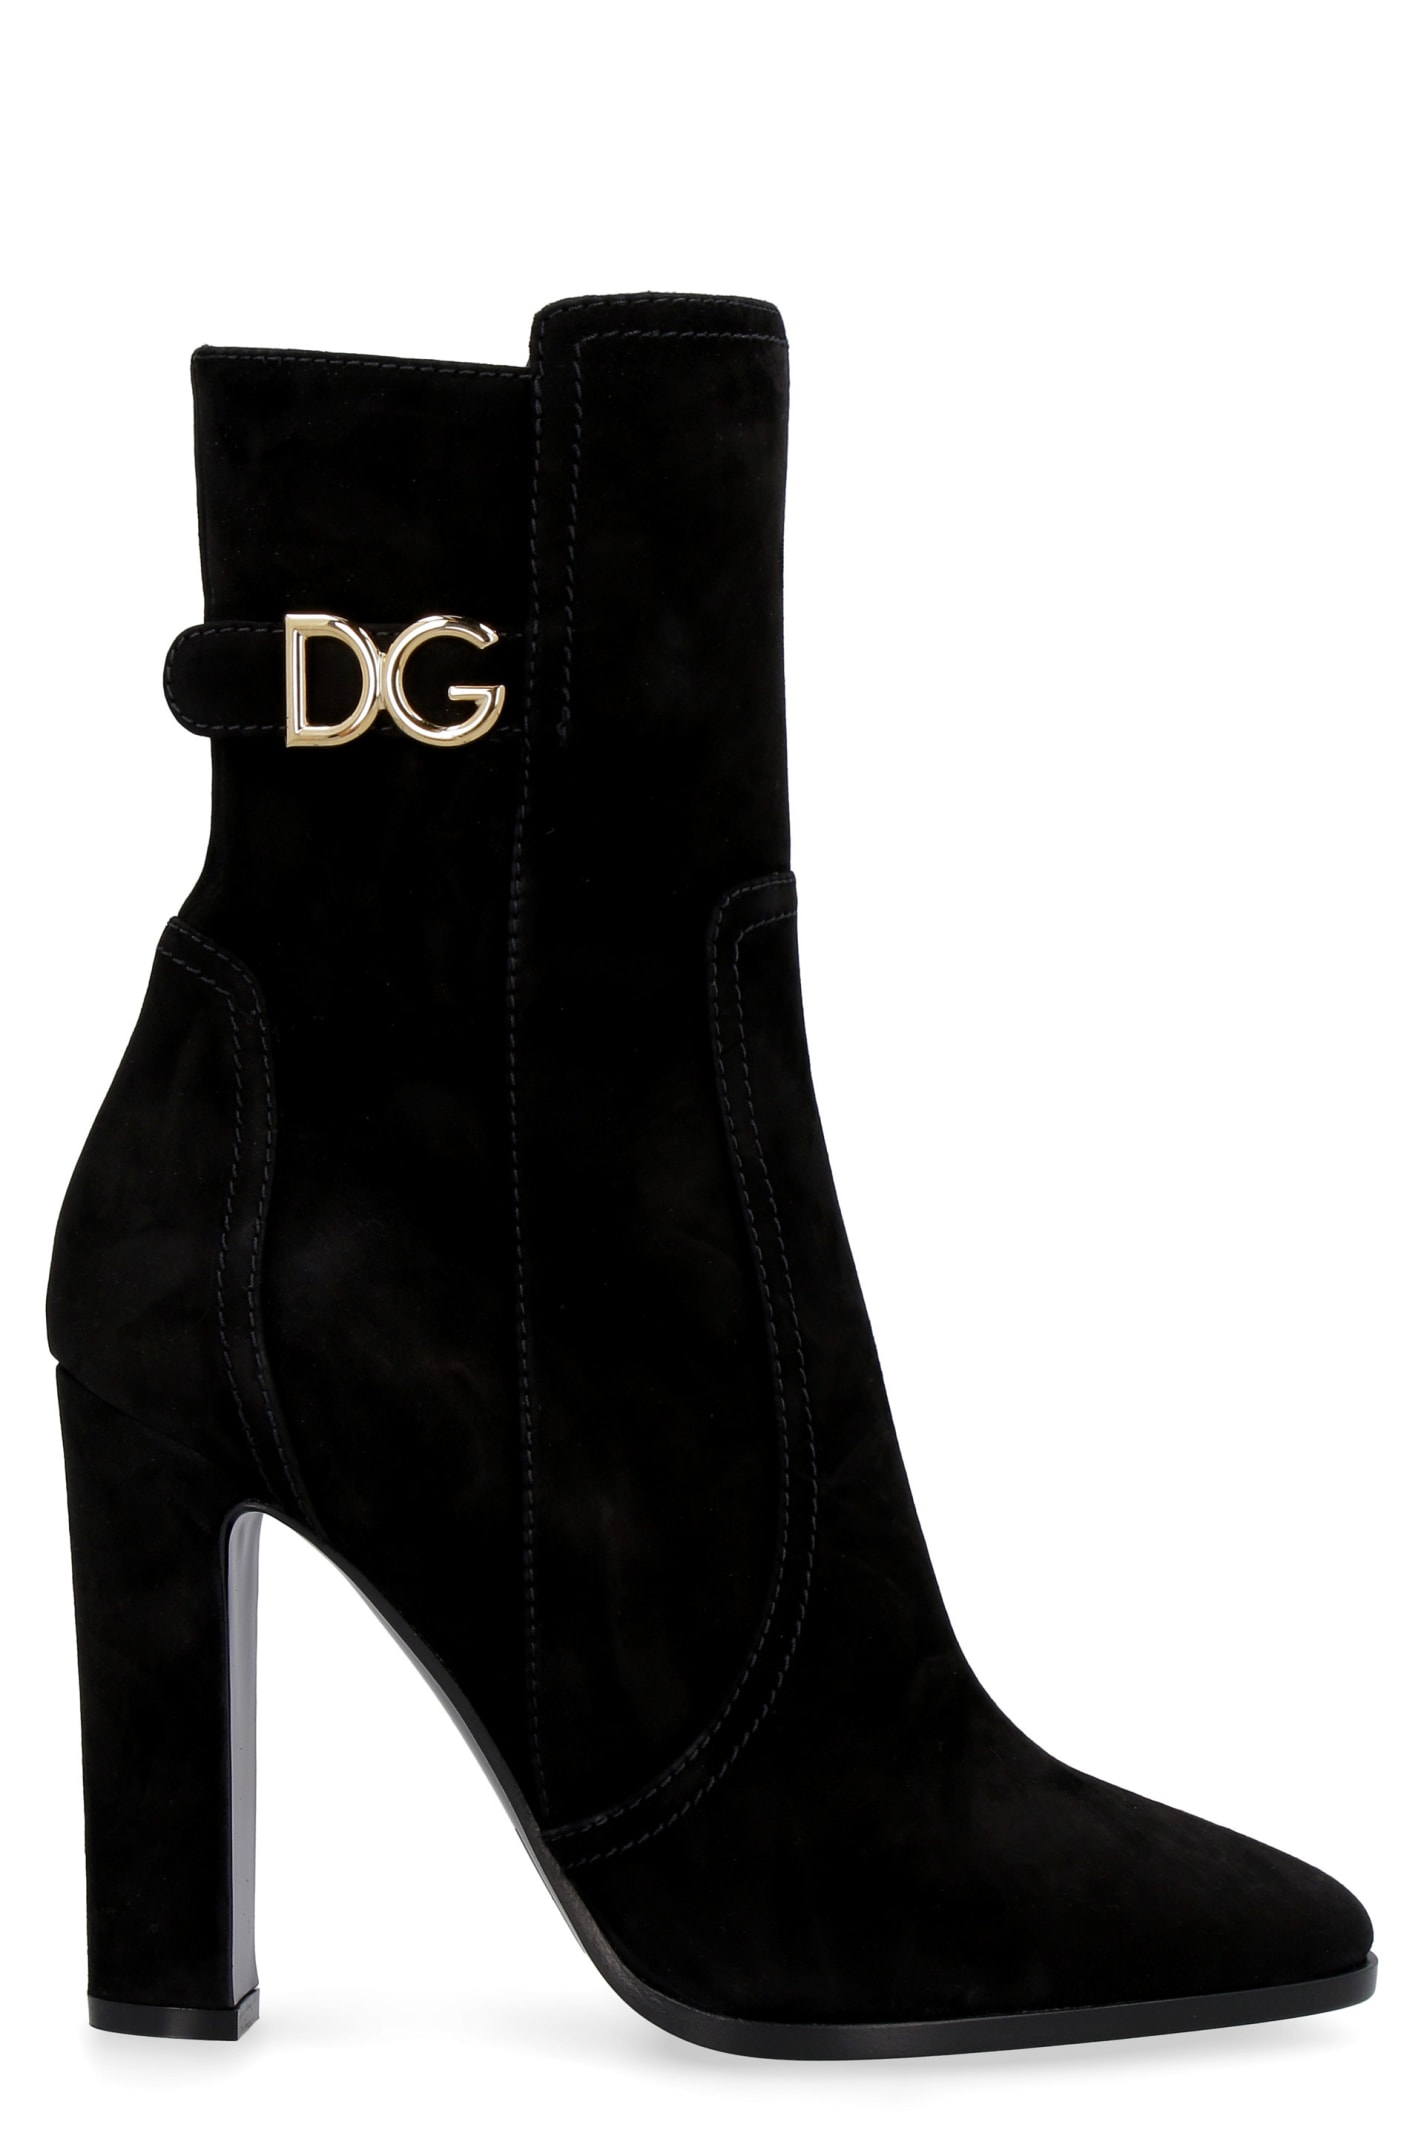 Dolce & Gabbana Caroline Suede Ankle Boots